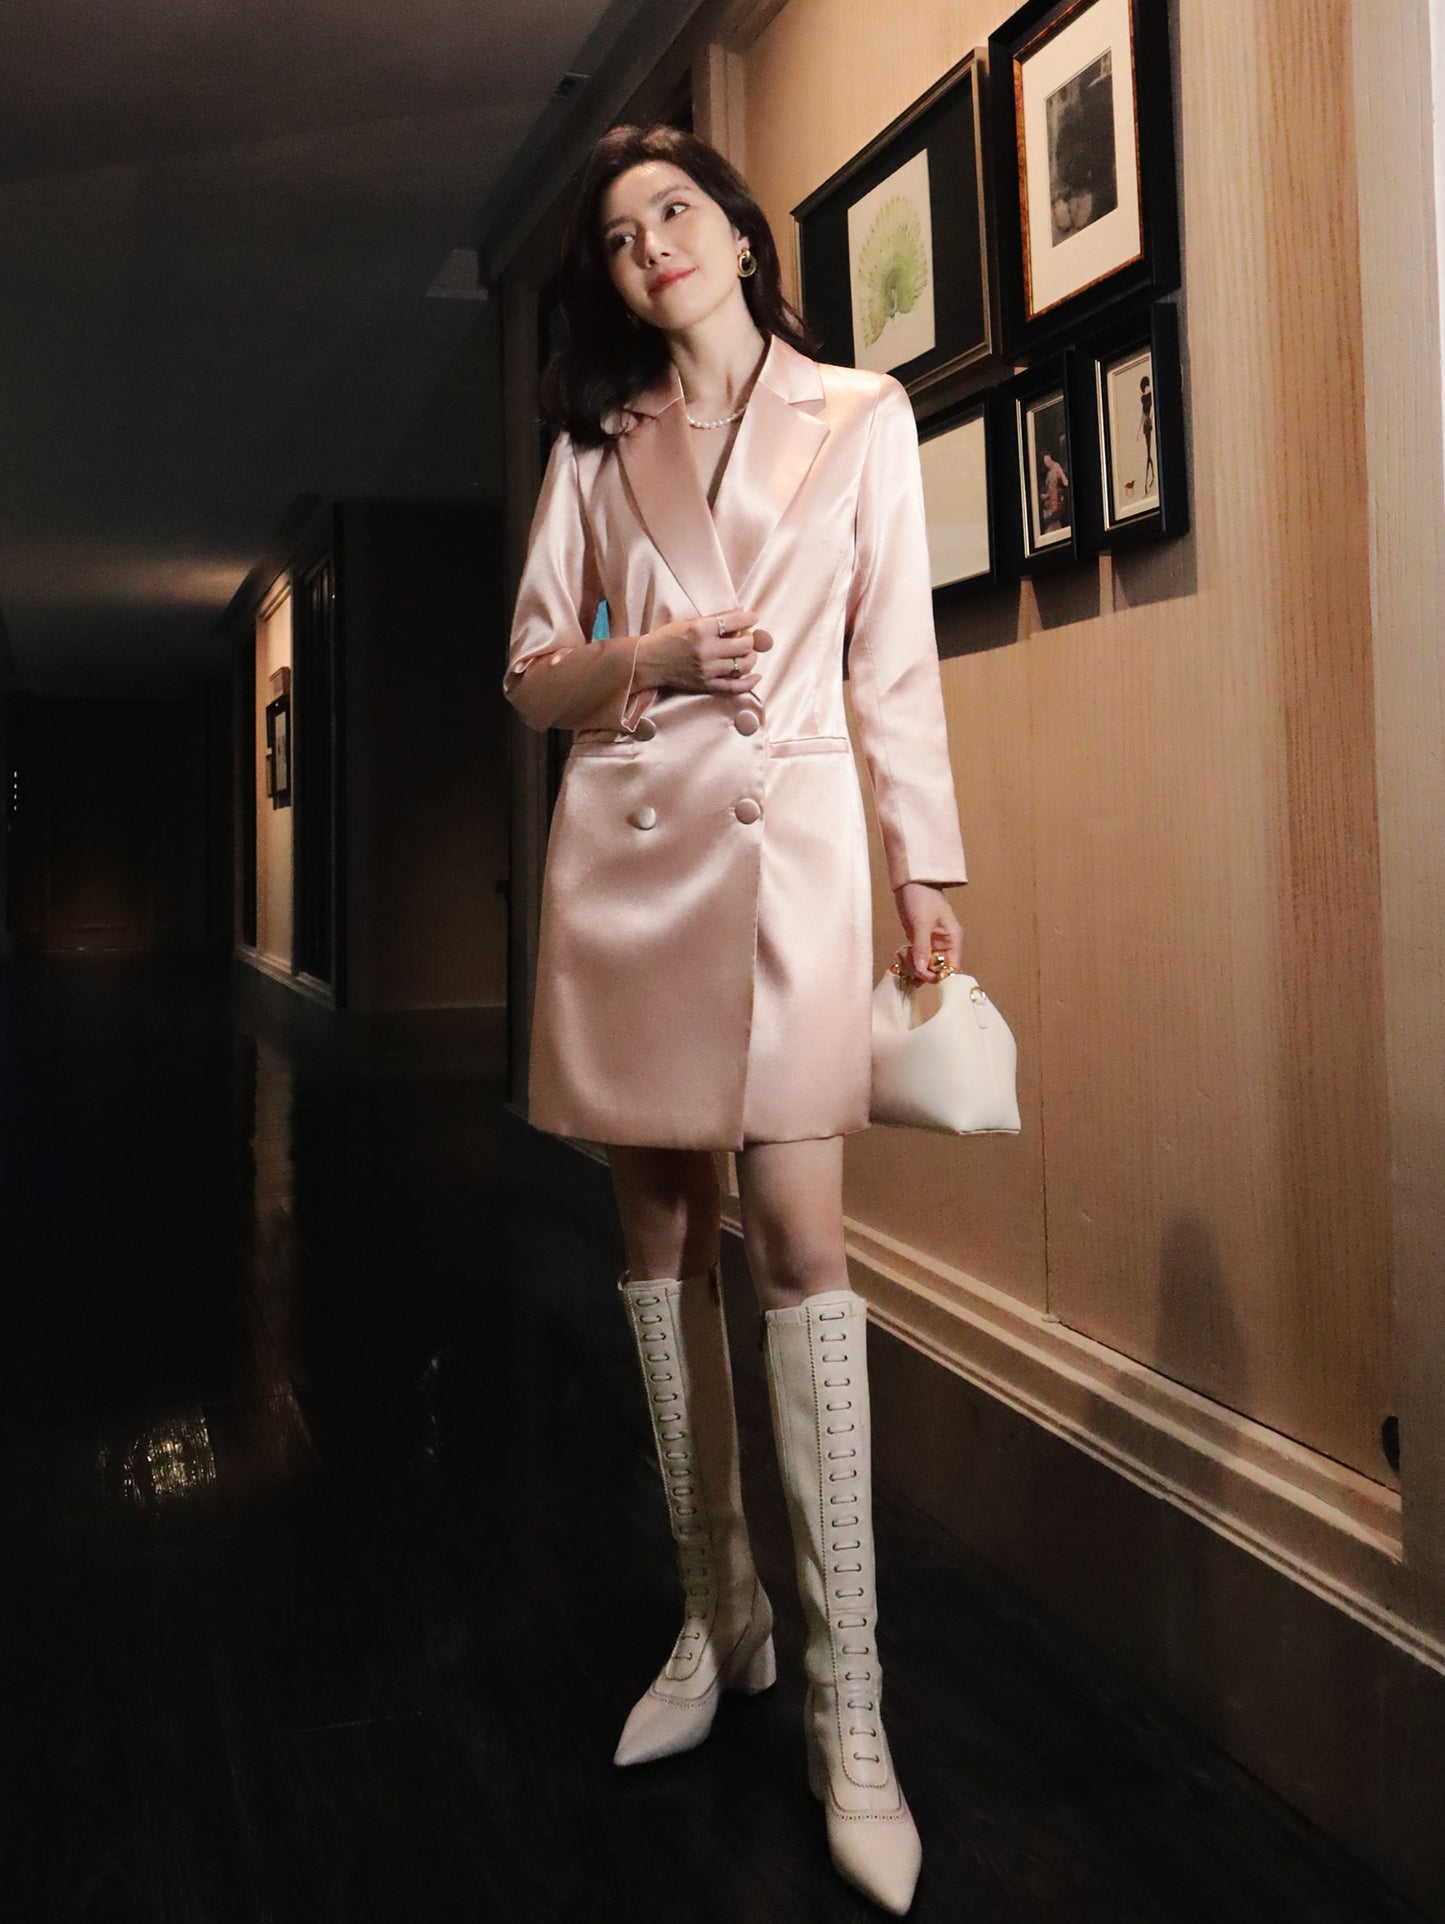 Ruisumi fashion commuting light luxury satin glossy pink suit skirt French mid-length coat- Thilia